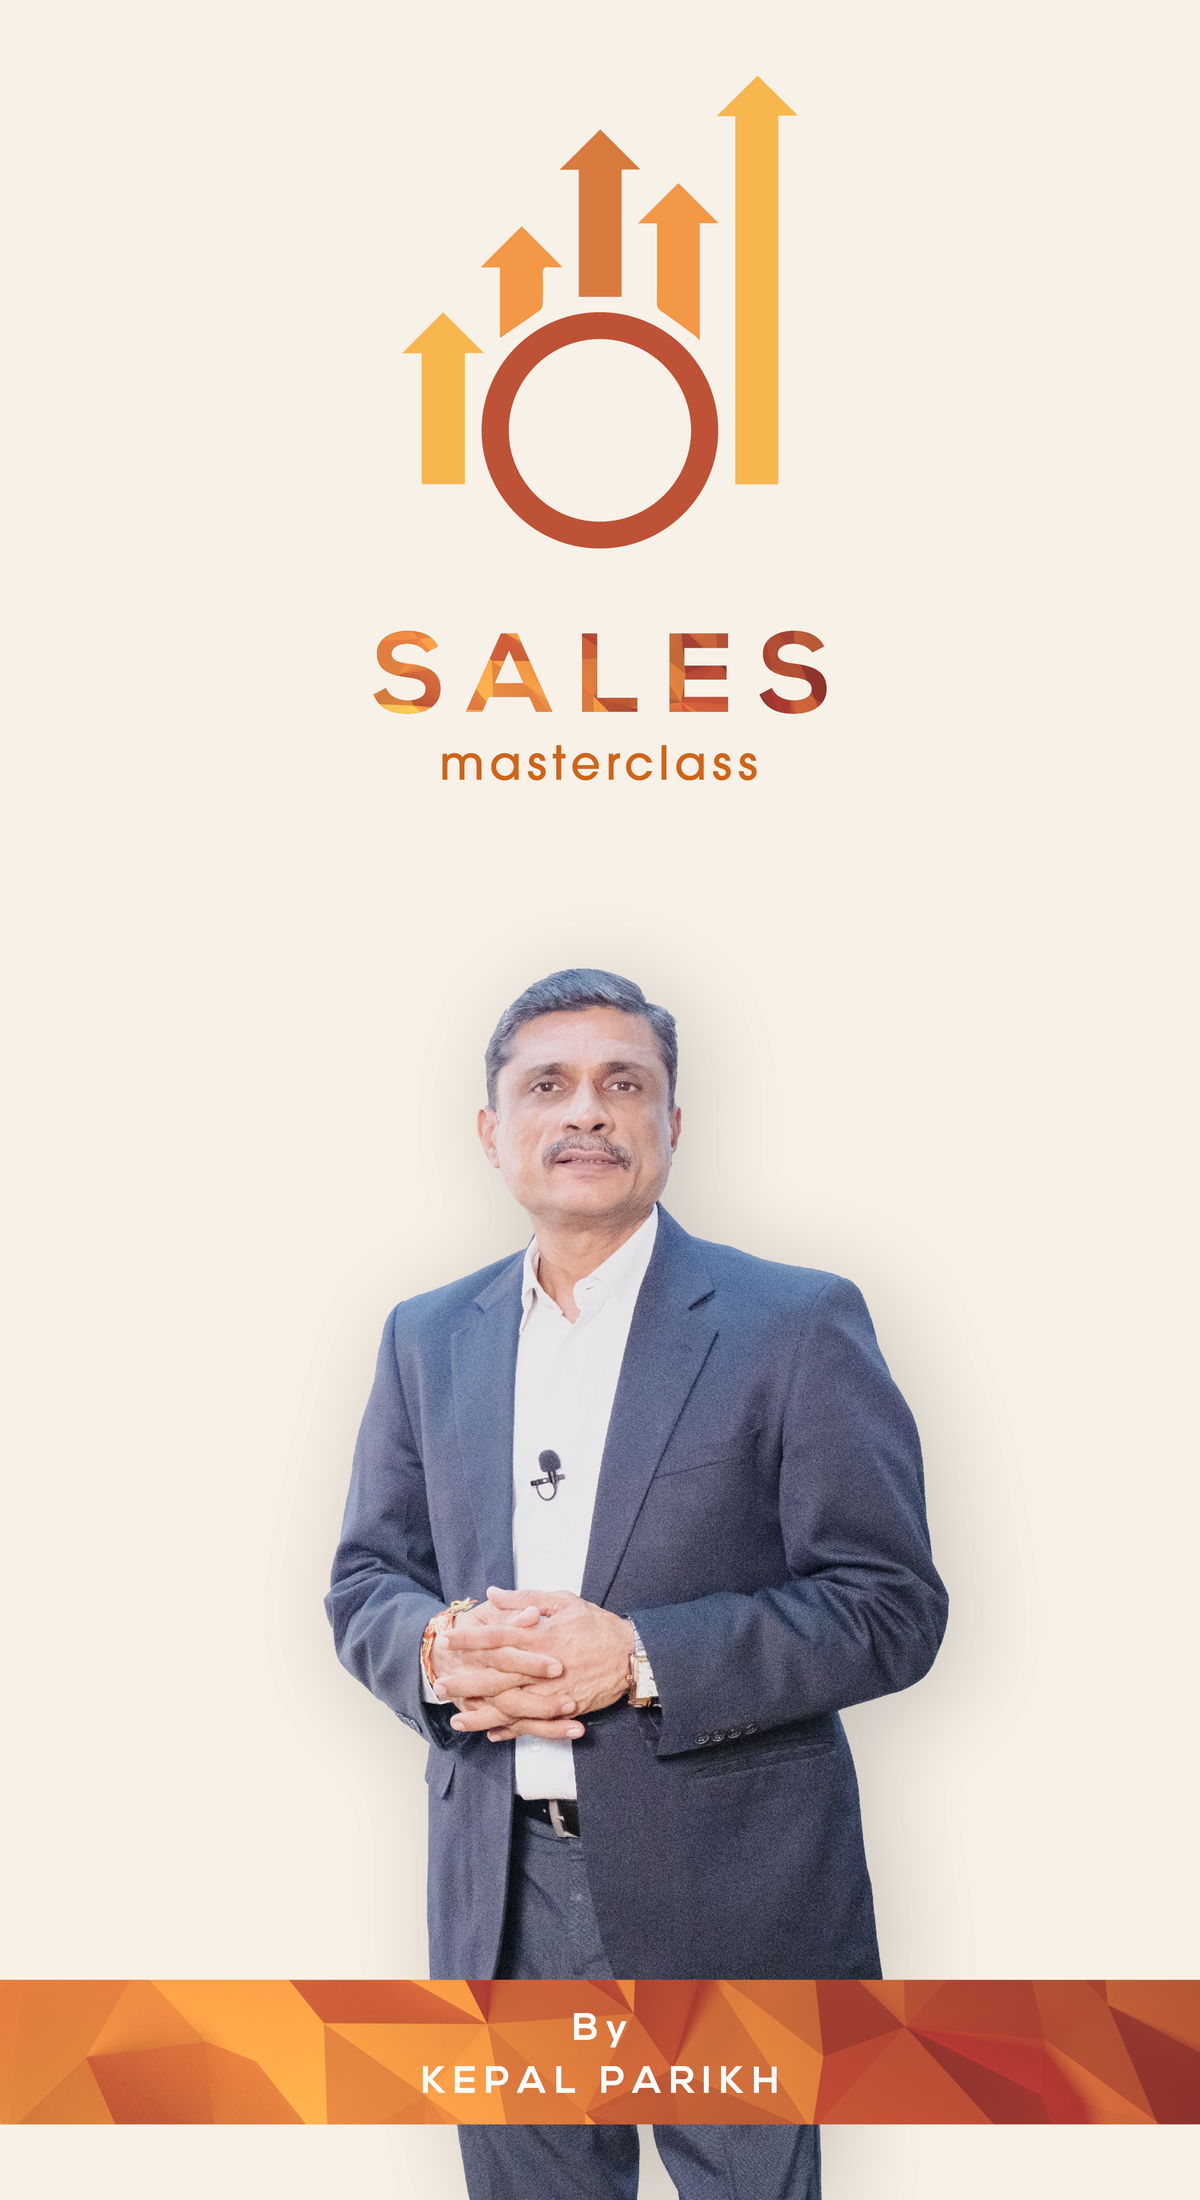 Sales Masterclass